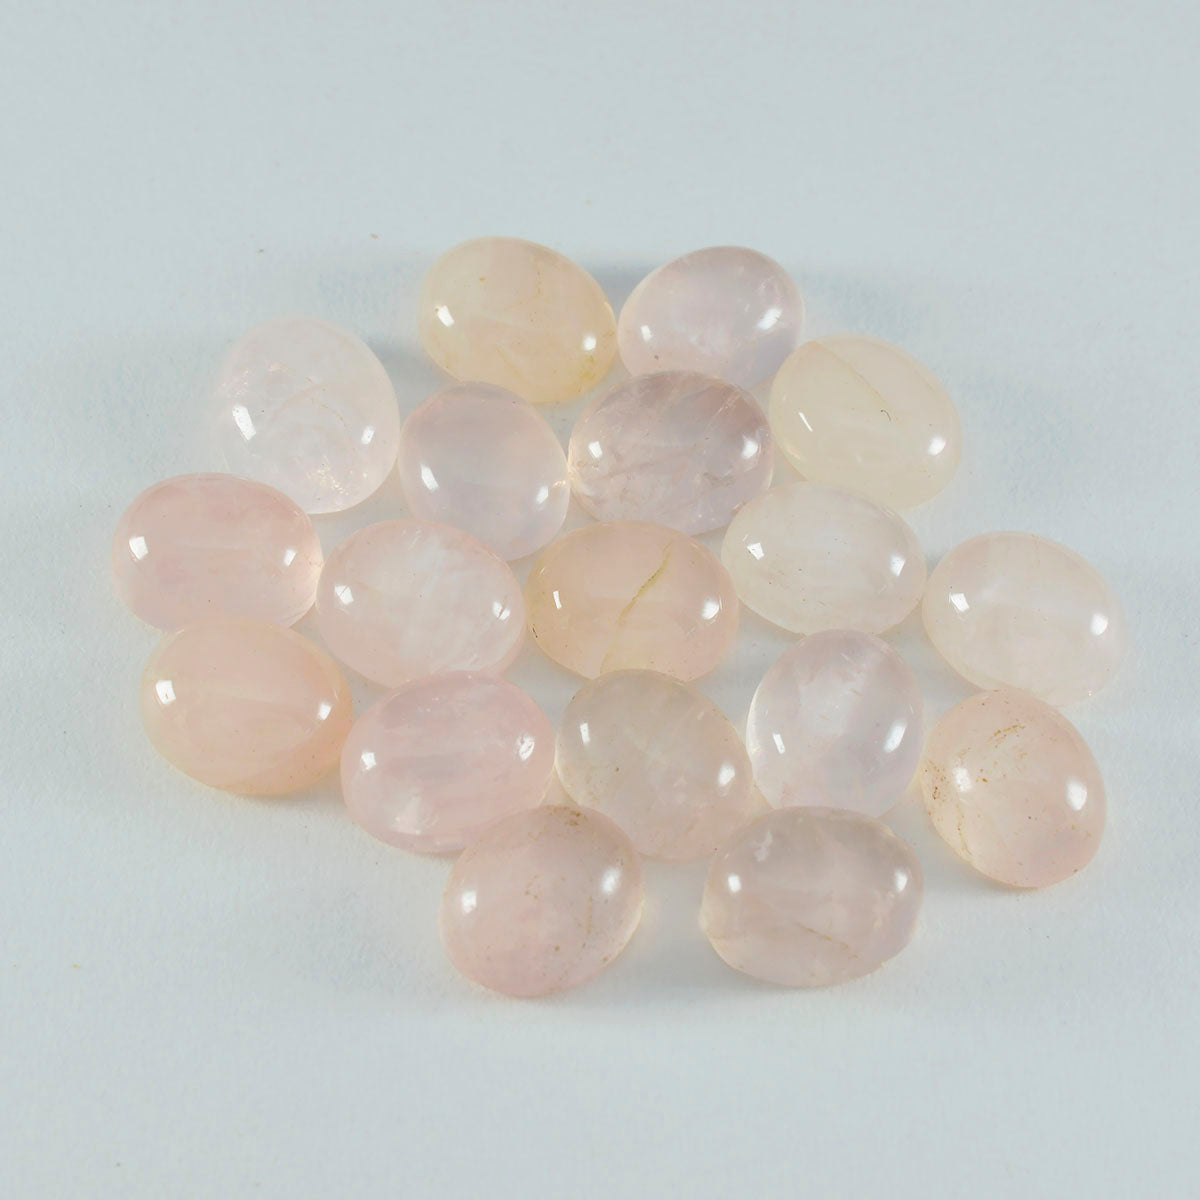 Riyogems 1PC roze rozenkwarts cabochon 5x7 mm ovale vorm verbazingwekkende kwaliteit edelsteen